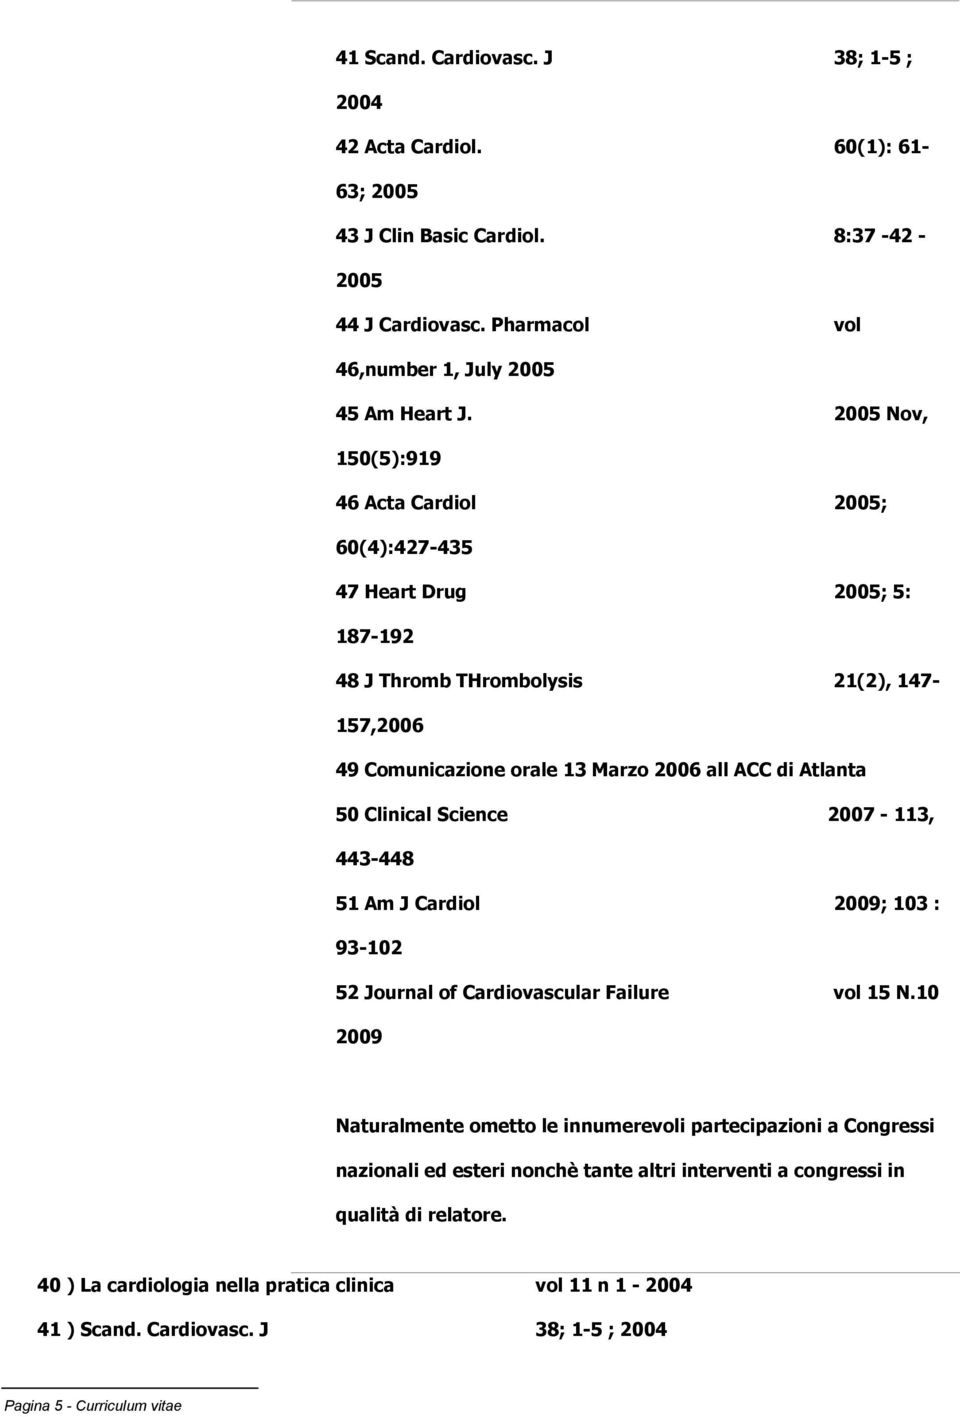 Clinical Science 2007-113, 443-448 51 Am J Cardiol 2009; 103 : 93-102 52 Journal of Cardiovascular Failure vol 15 N.